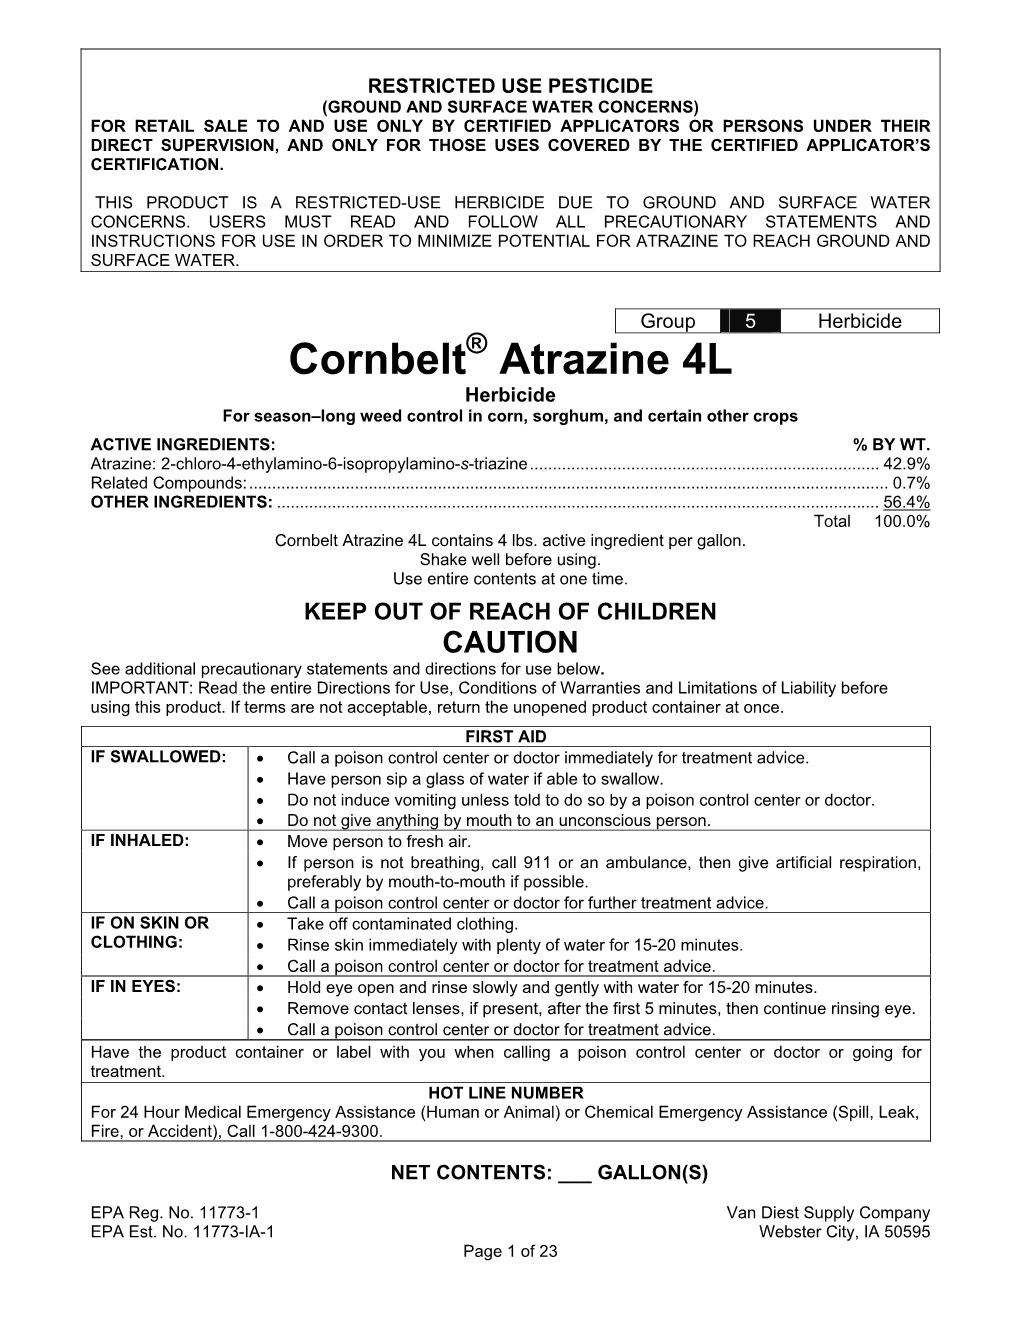 Cornbelt Atrazine 4L Contains 4 Lbs